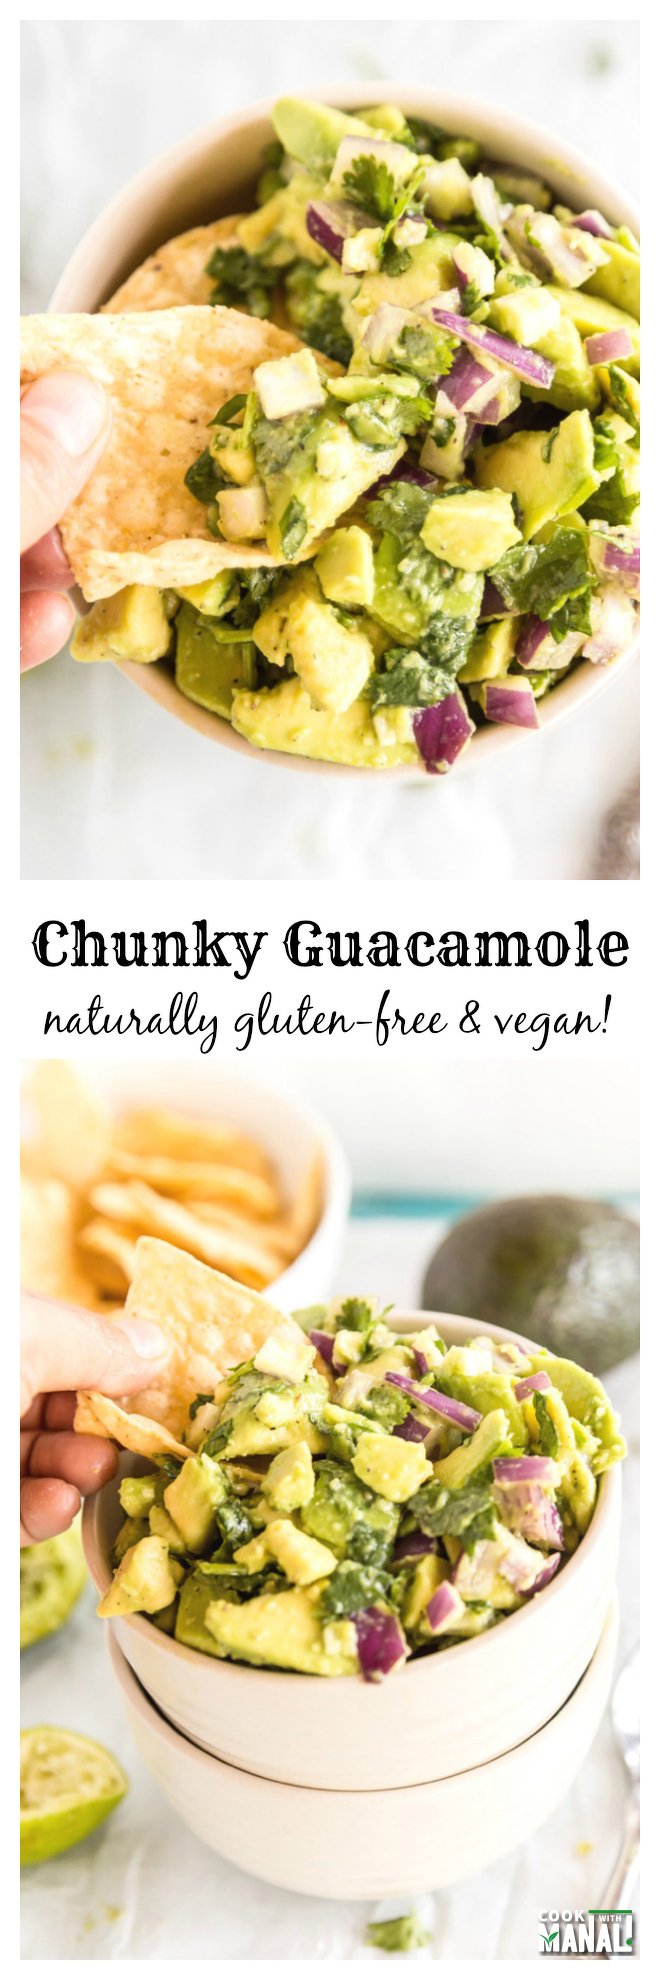 Chunky Guacamole Collage